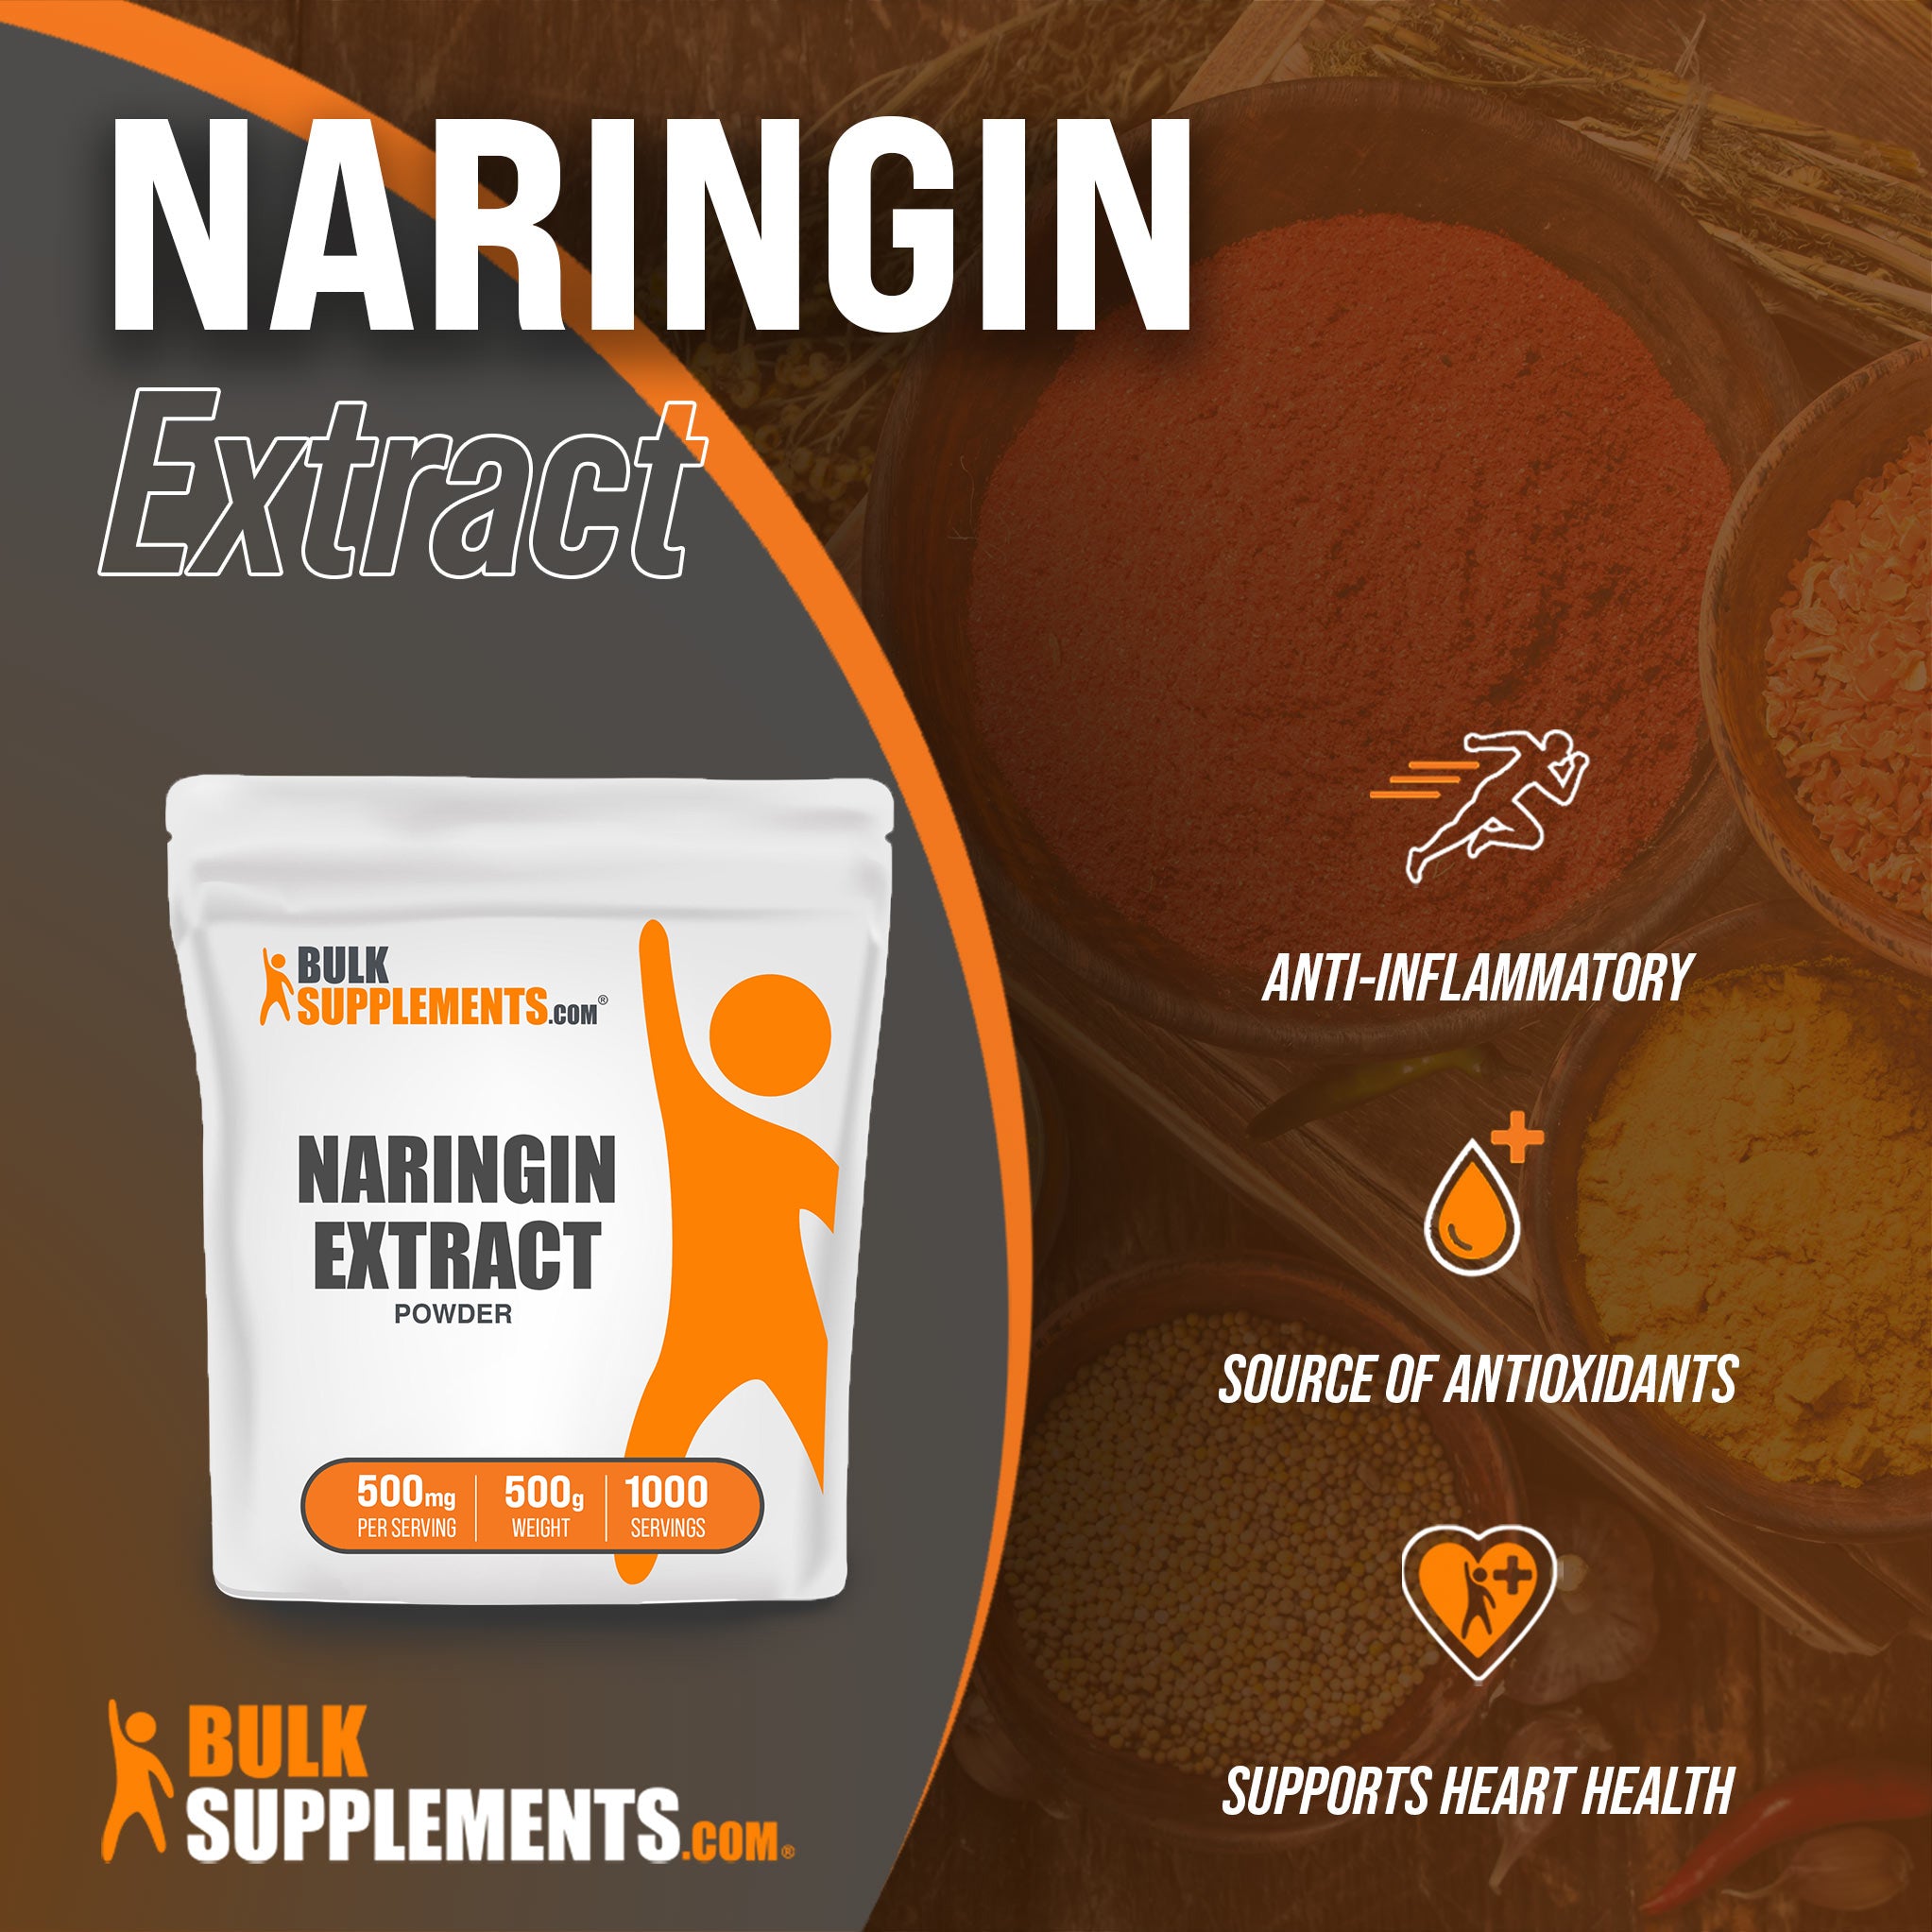 Benefits of Naringin Extract: anti-inflammatory, source of antioxidants, supports heart health